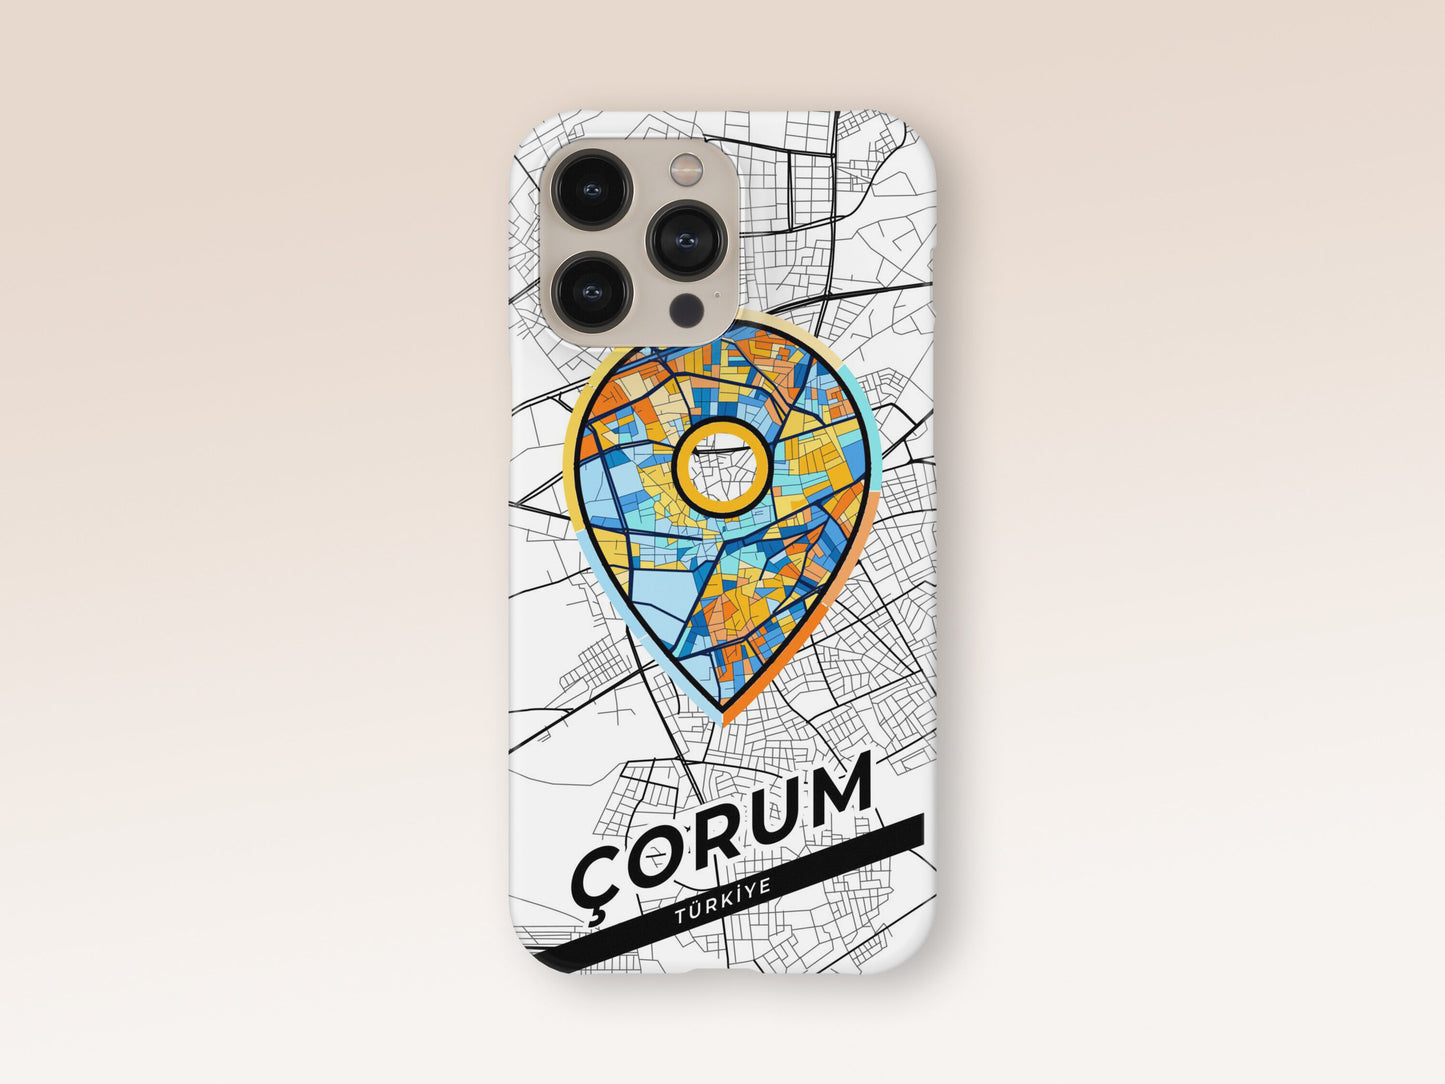 Çorum Turkey slim phone case with colorful icon. Birthday, wedding or housewarming gift. Couple match cases. 1